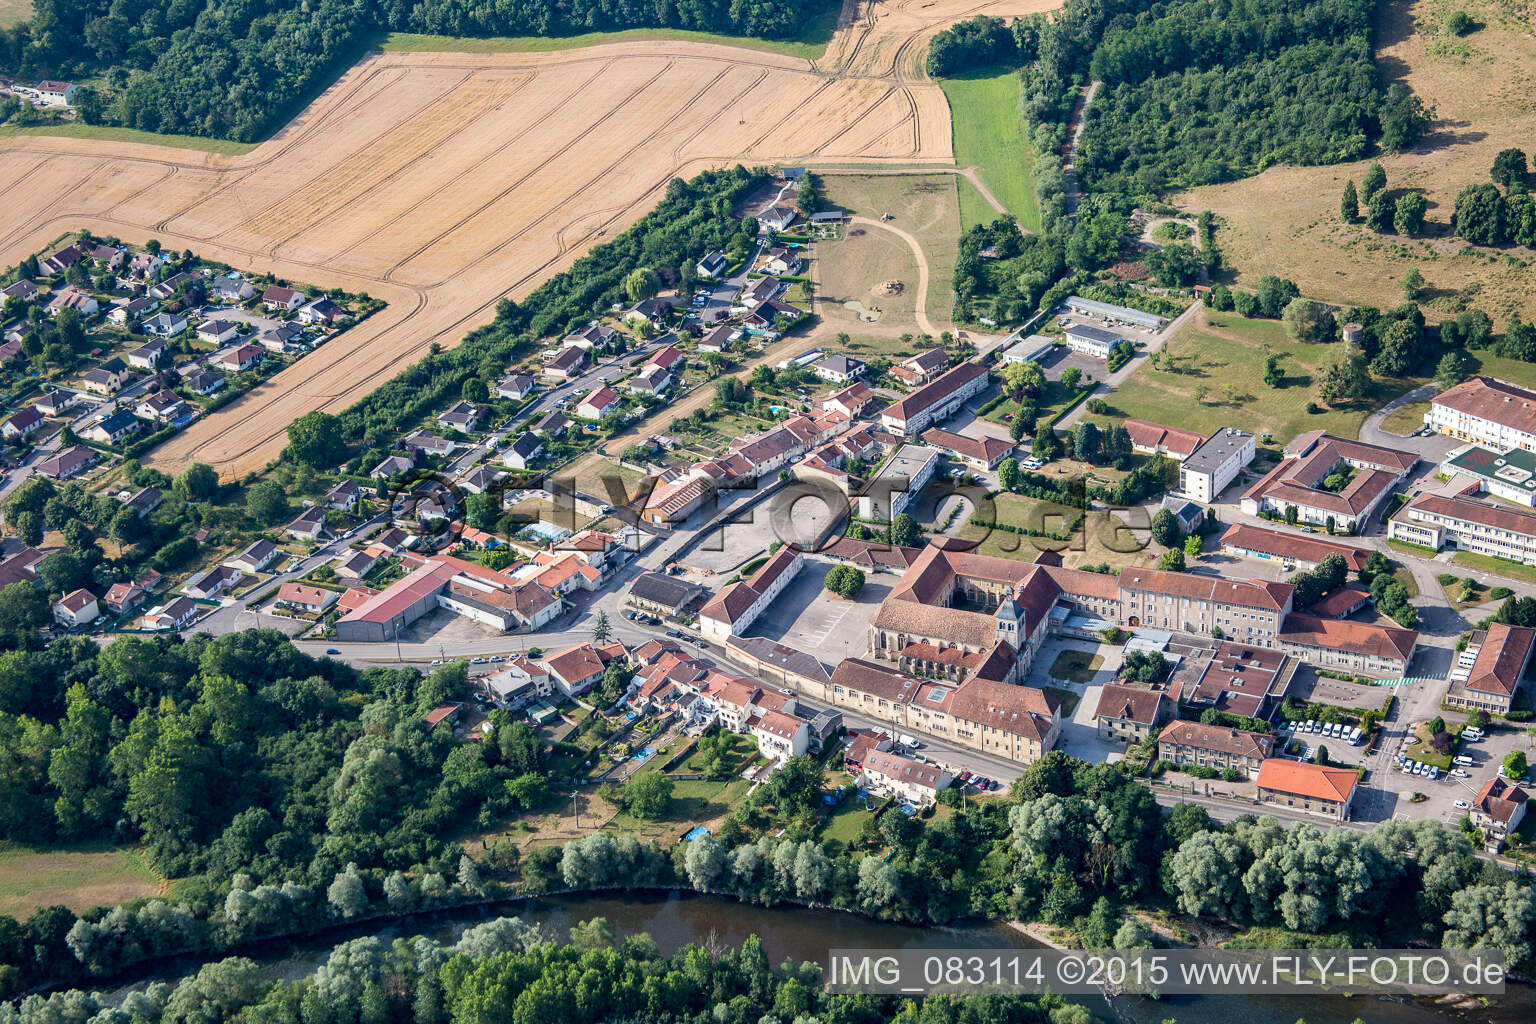 Luftbild von Benediktinerkloster/Prieuré bénédictin à Flavigny-sur-Moselle im Bundesland Meurthe-et-Moselle, Frankreich